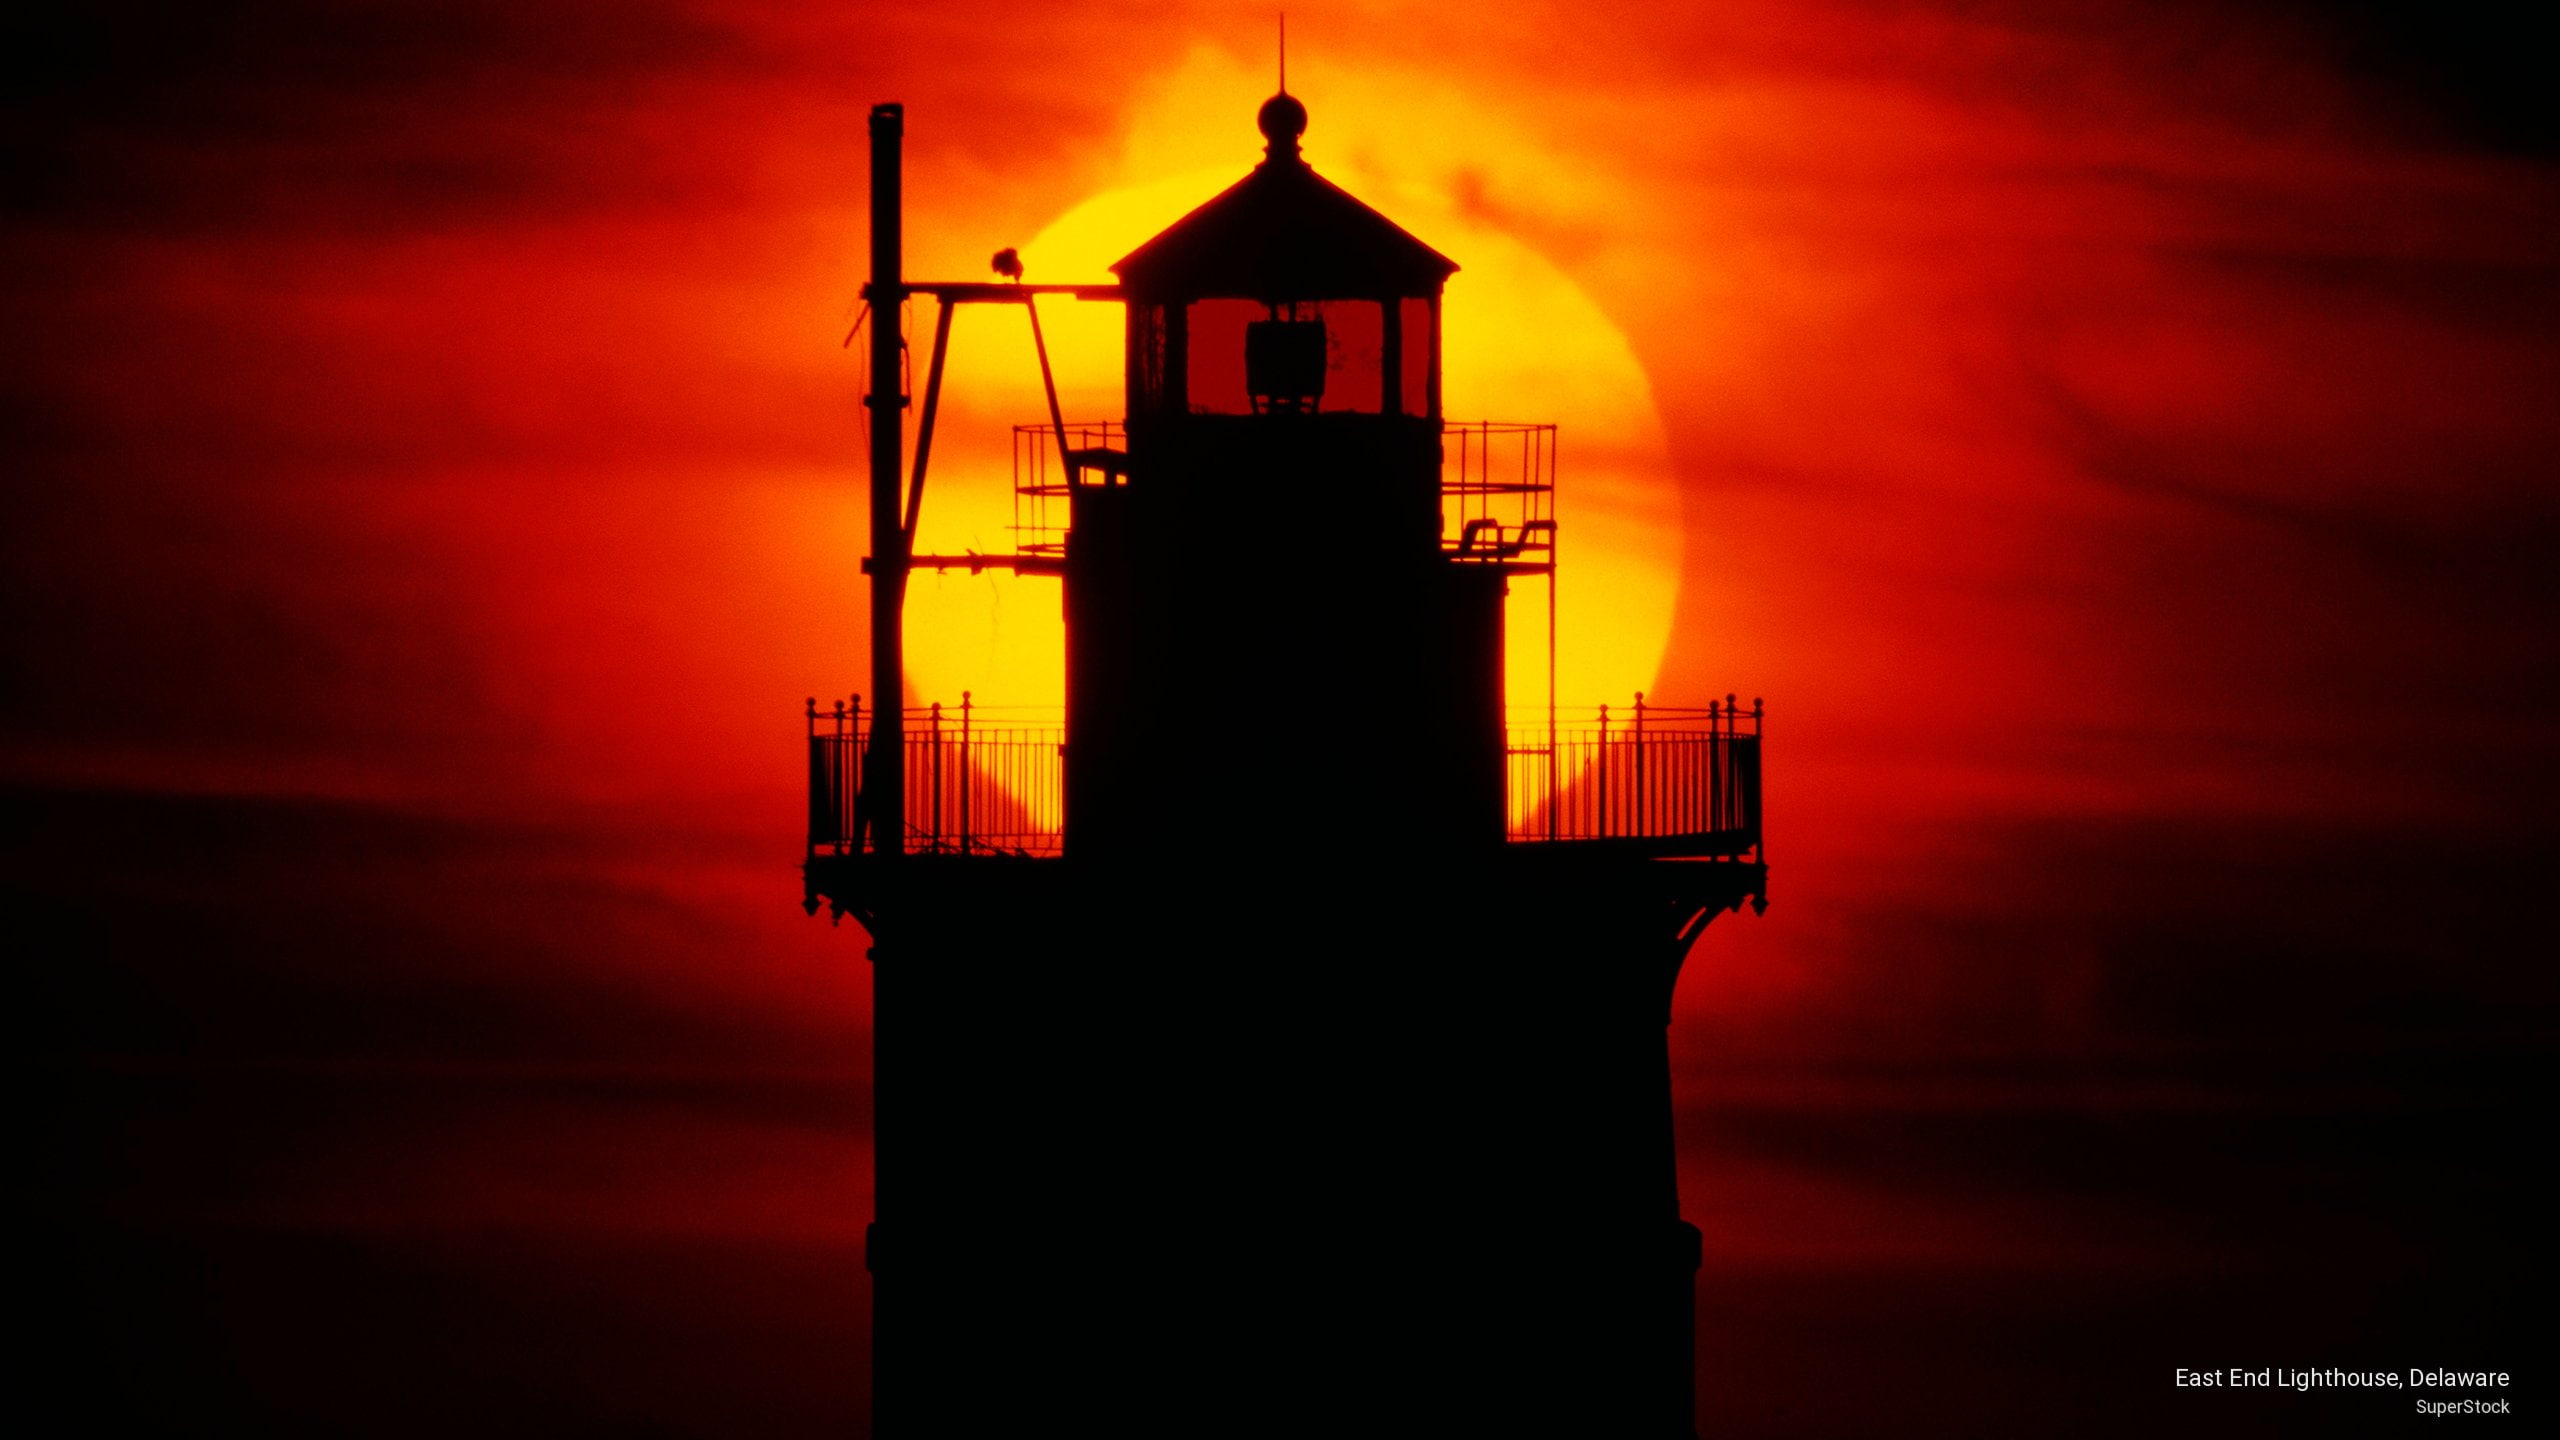 East End Lighthouse, Delaware, Sunrises/Sunsets